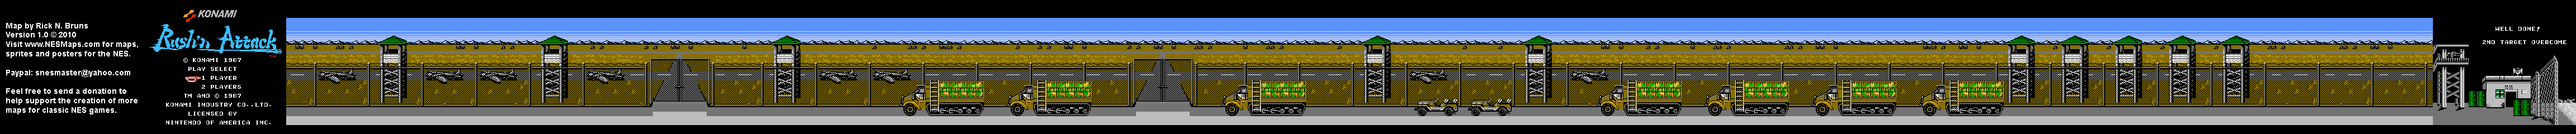 Rush'n Attack - Level 2 Nintendo NES Map BG